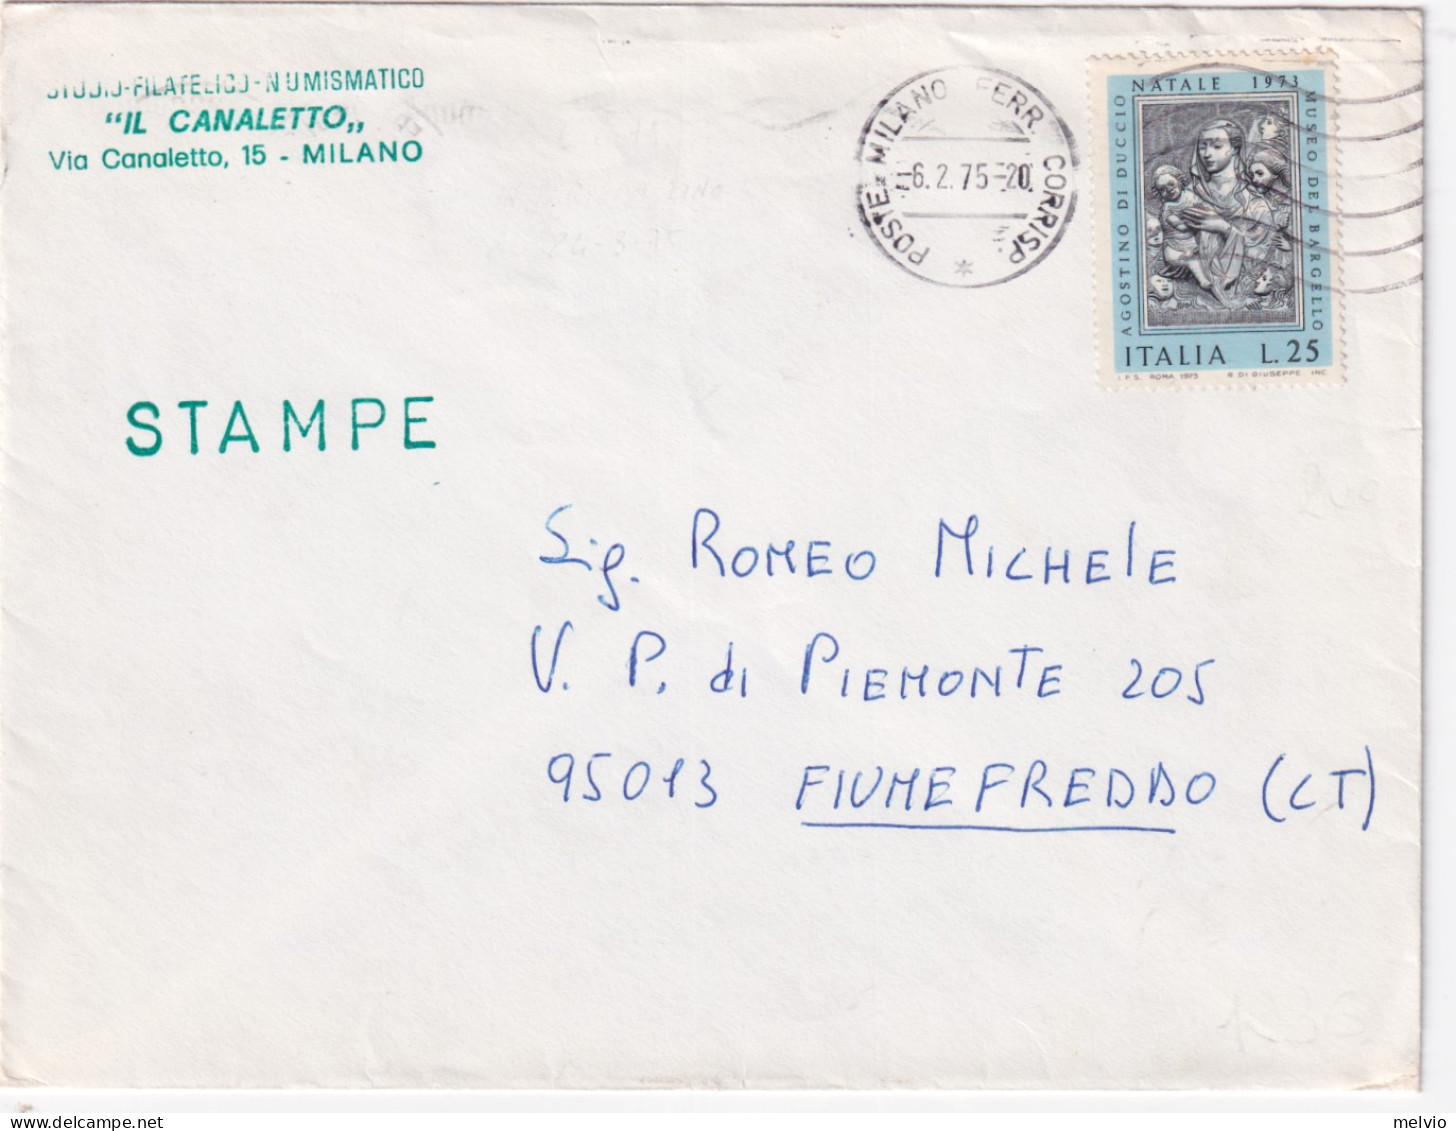 1975-NATALE '73 Lire 25 (1221) Isolato Su Stampe - 1971-80: Poststempel